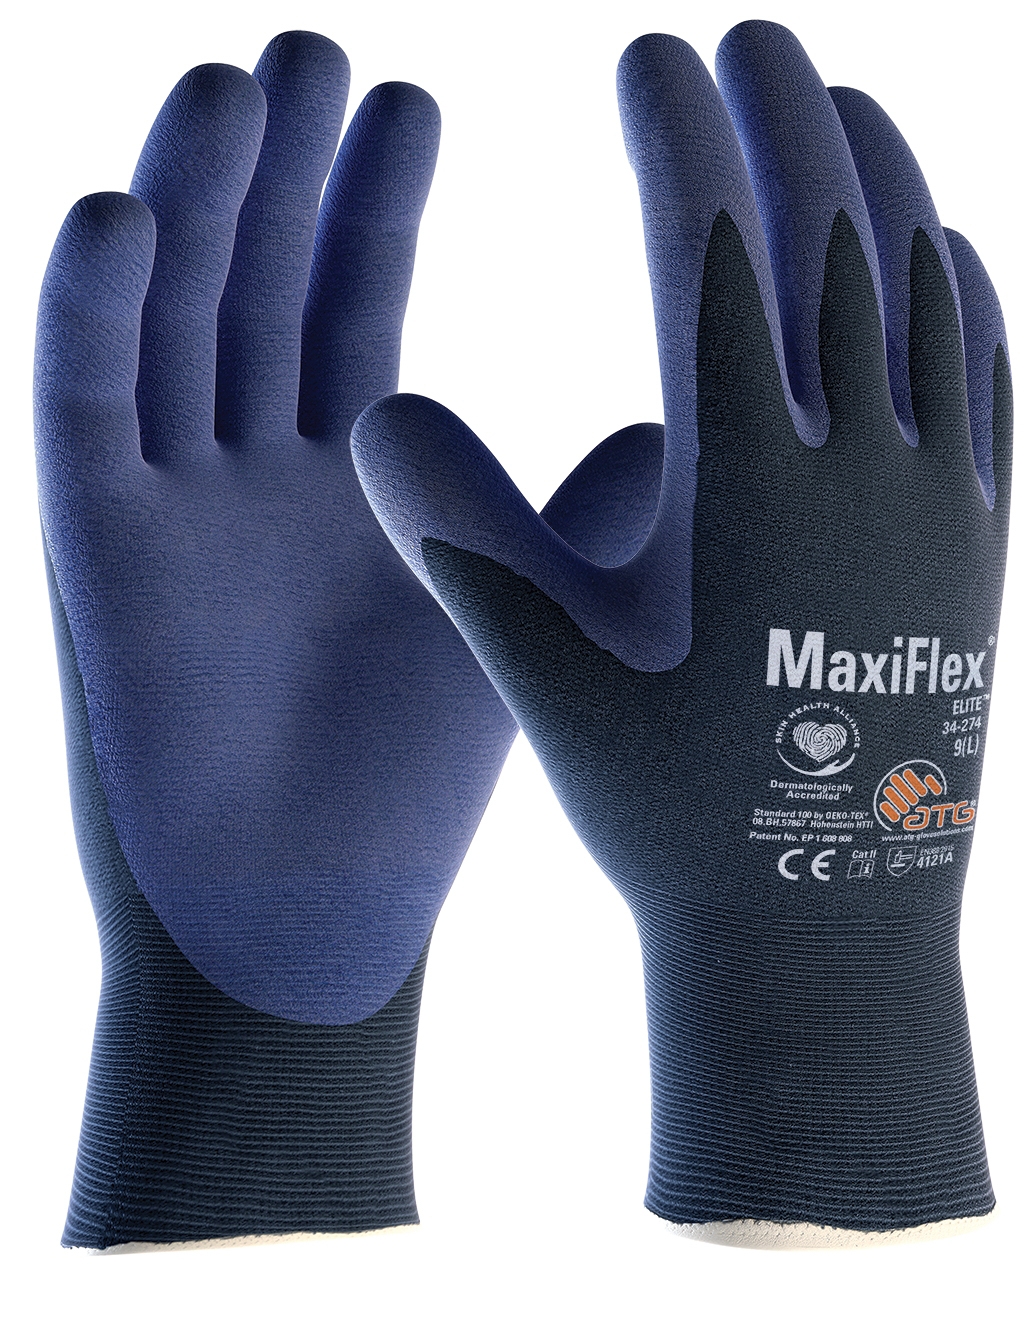 MaxiFlex Elite (34-274) Nylon-Strickhandschuh extra fein